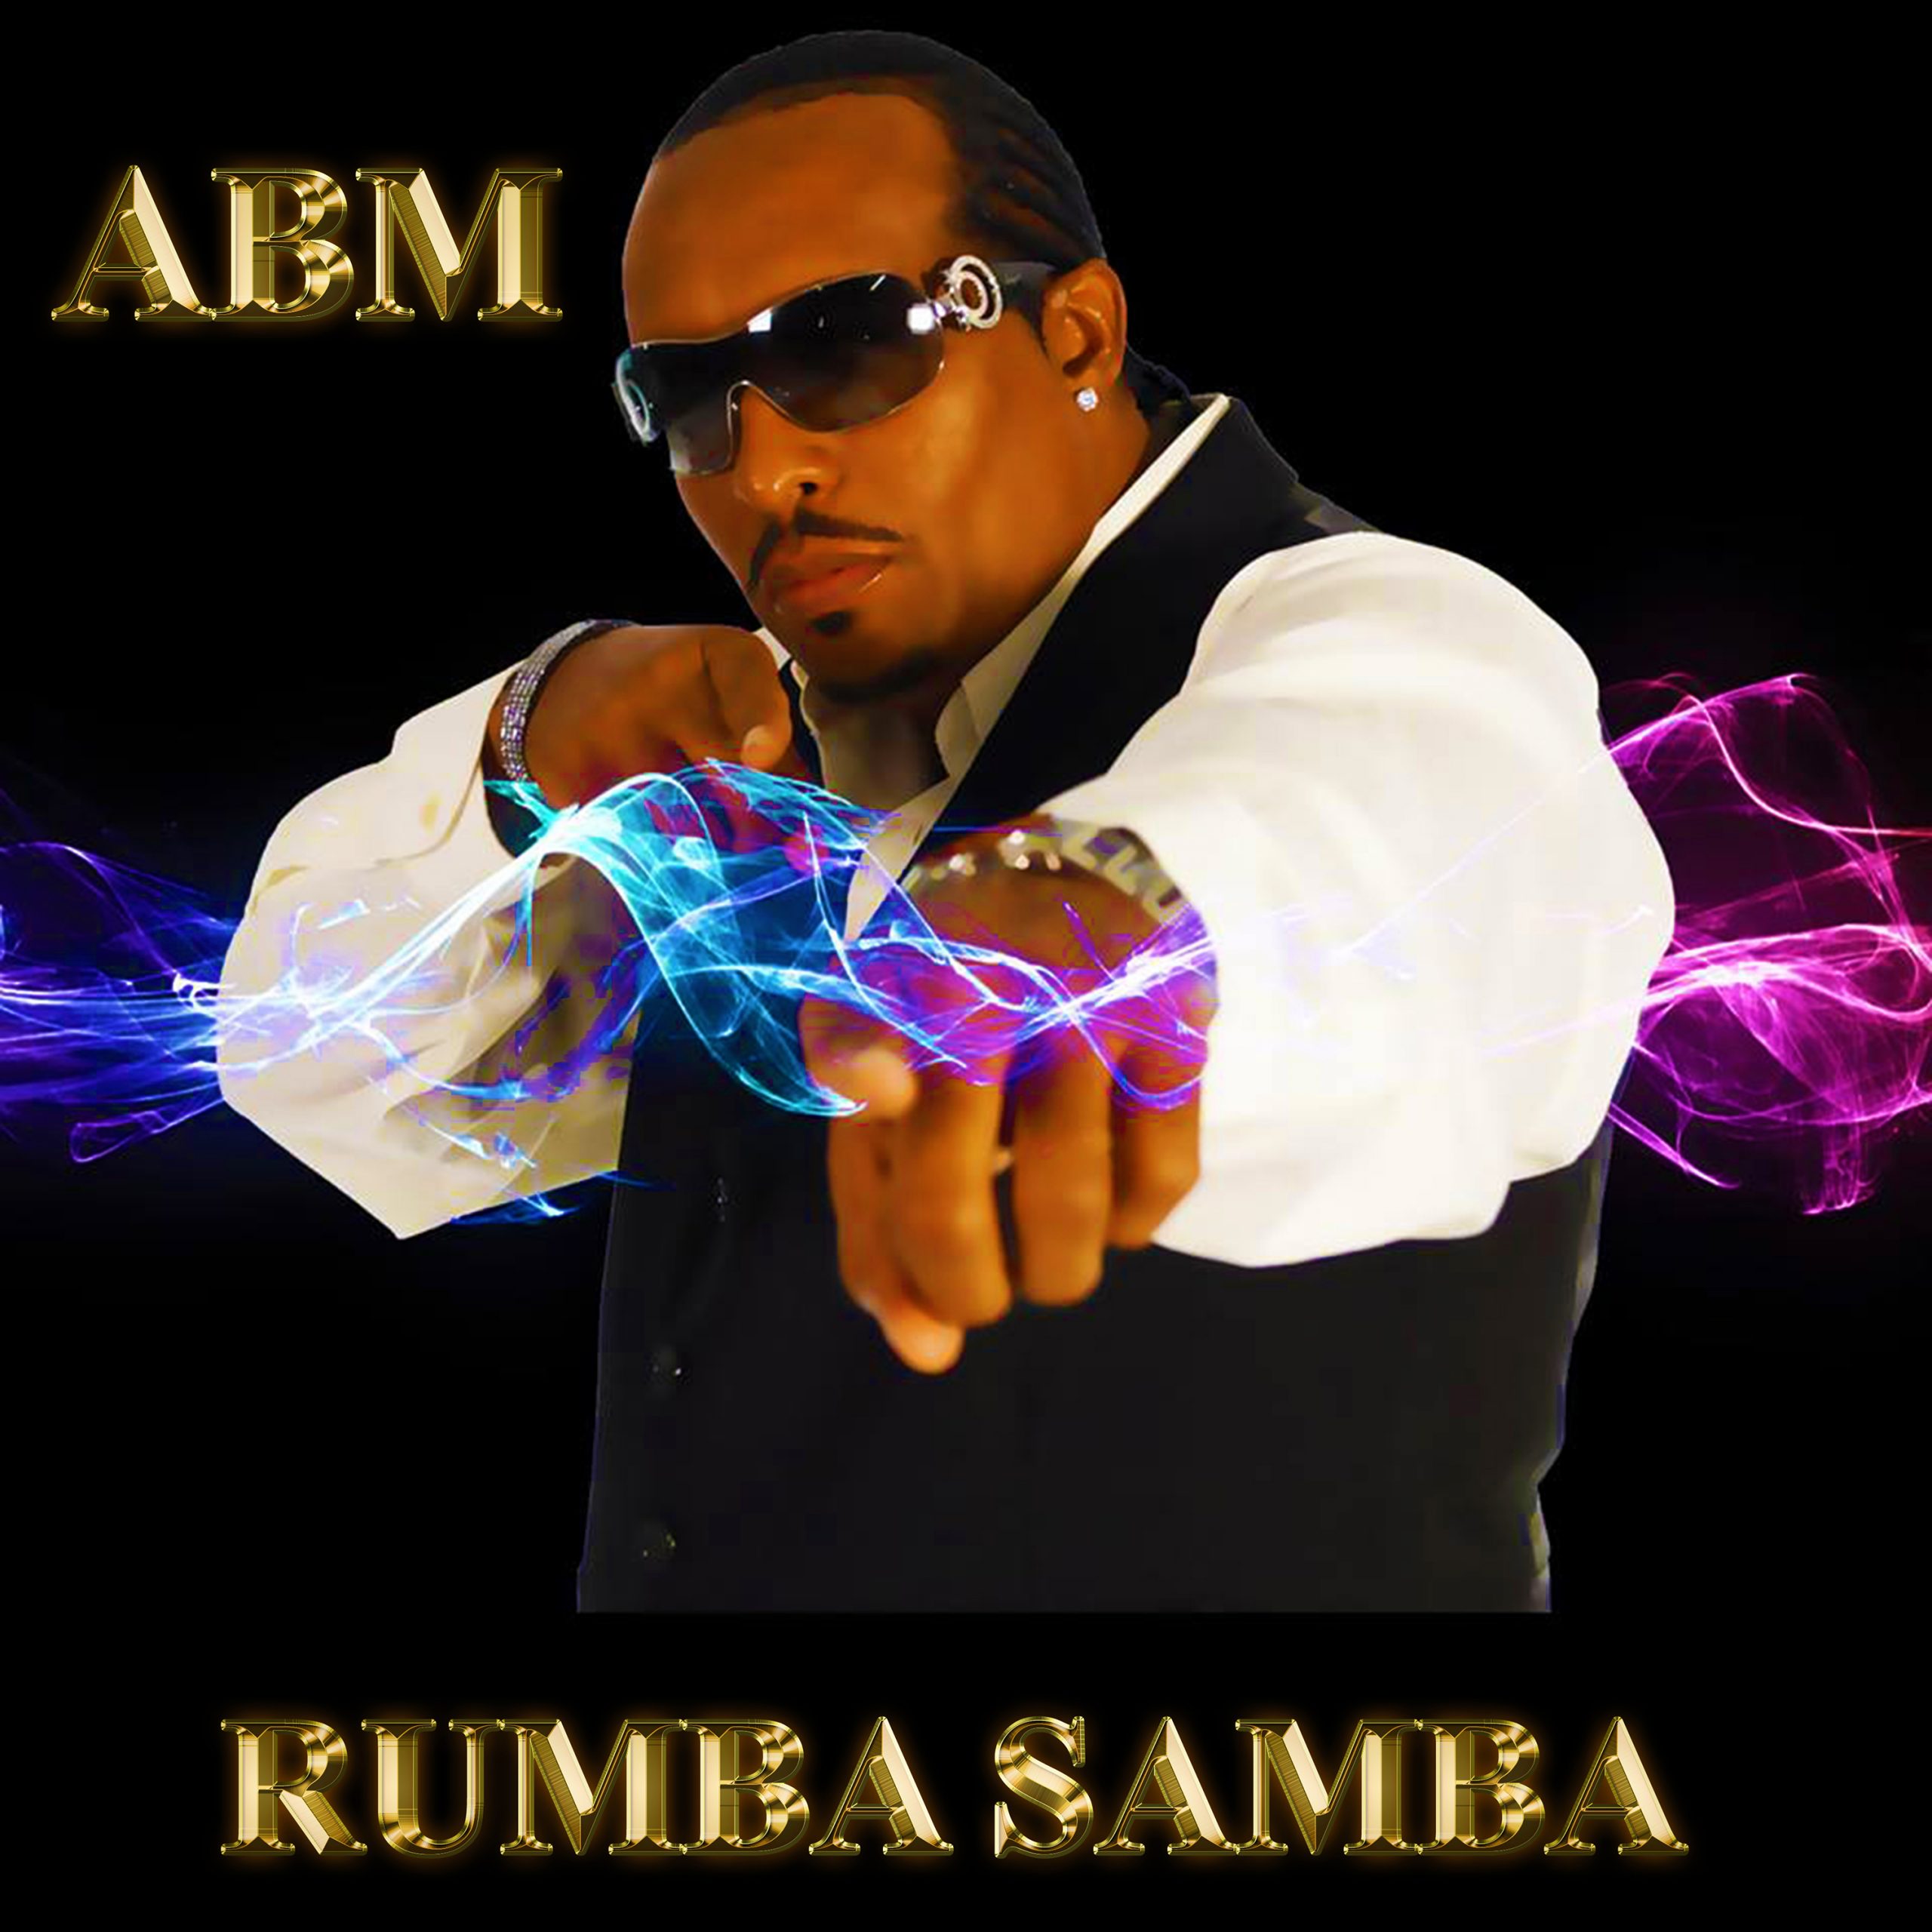 ABM releases classic single ‘Rumba Samba’